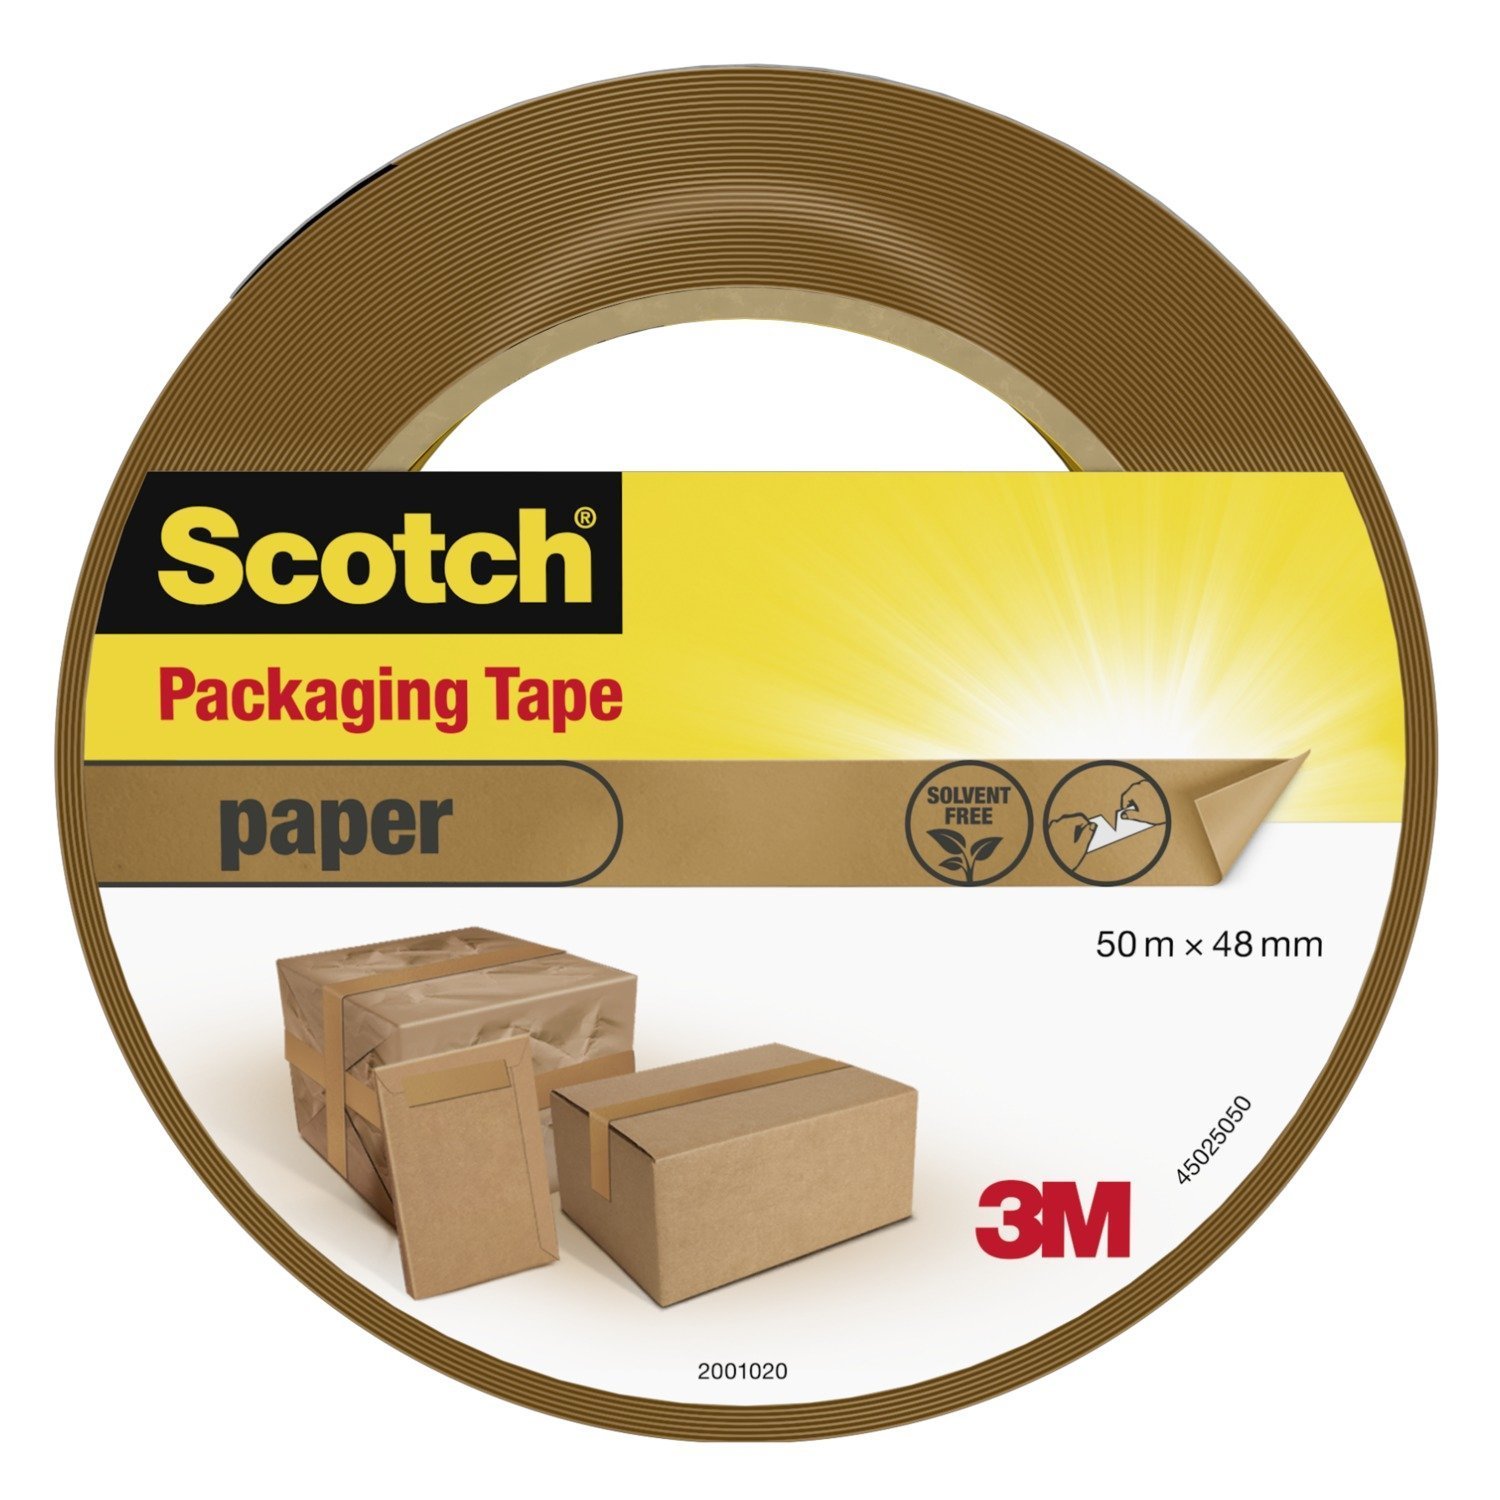 Скотч упаковочный полоска. Scotch Packaging Tape. Упаковка paper Tape. Скотч Браун салфетка.